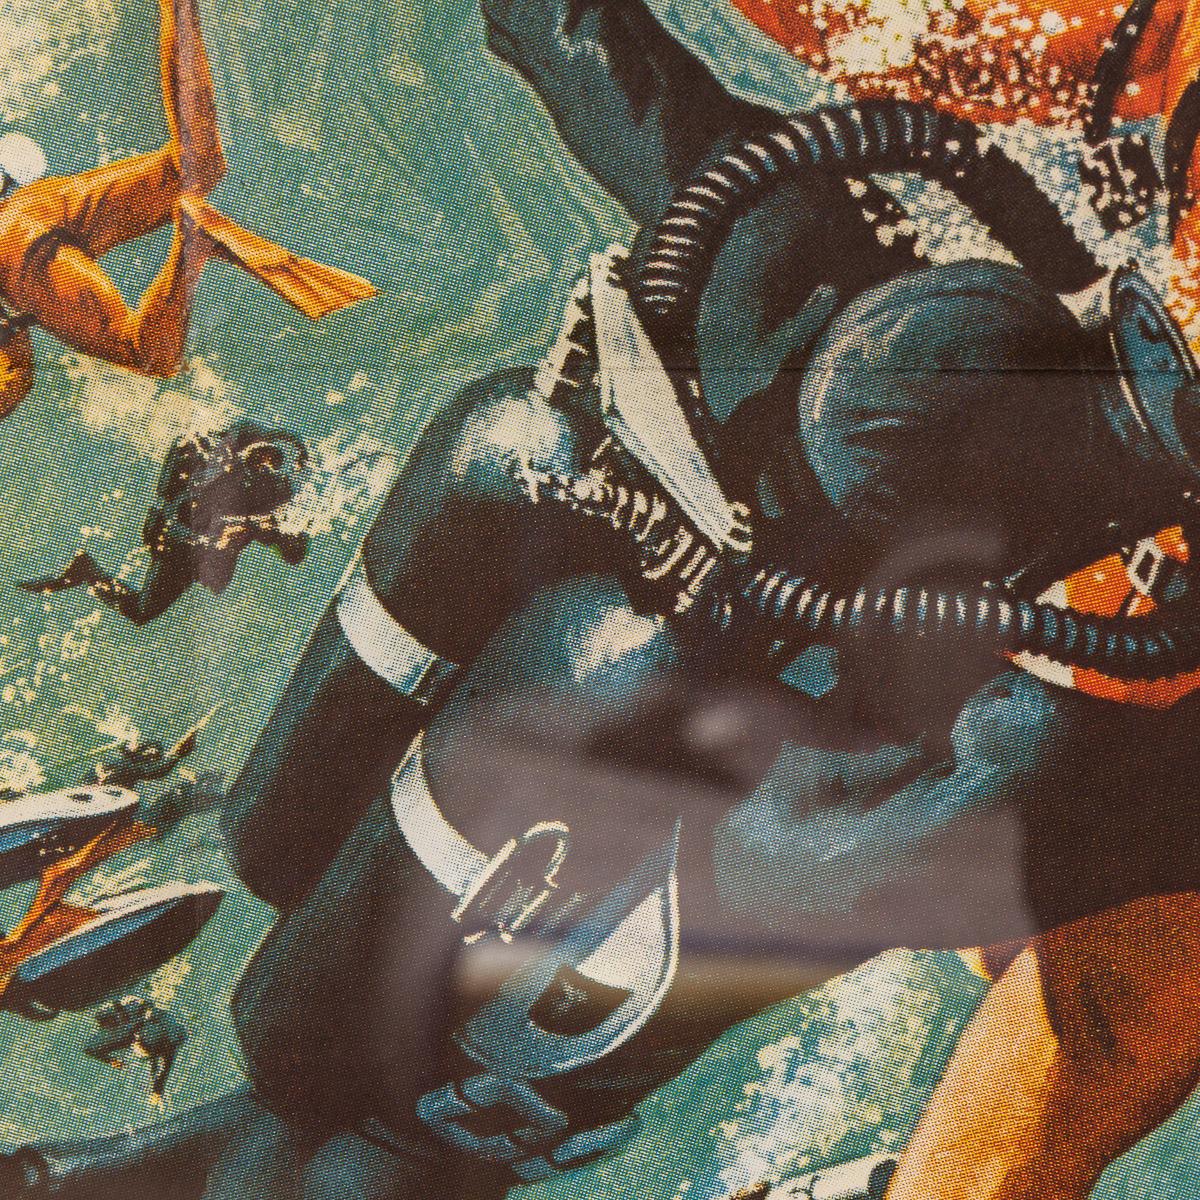 Original French Re-Release James Bond 'Thunderball' Poster 4